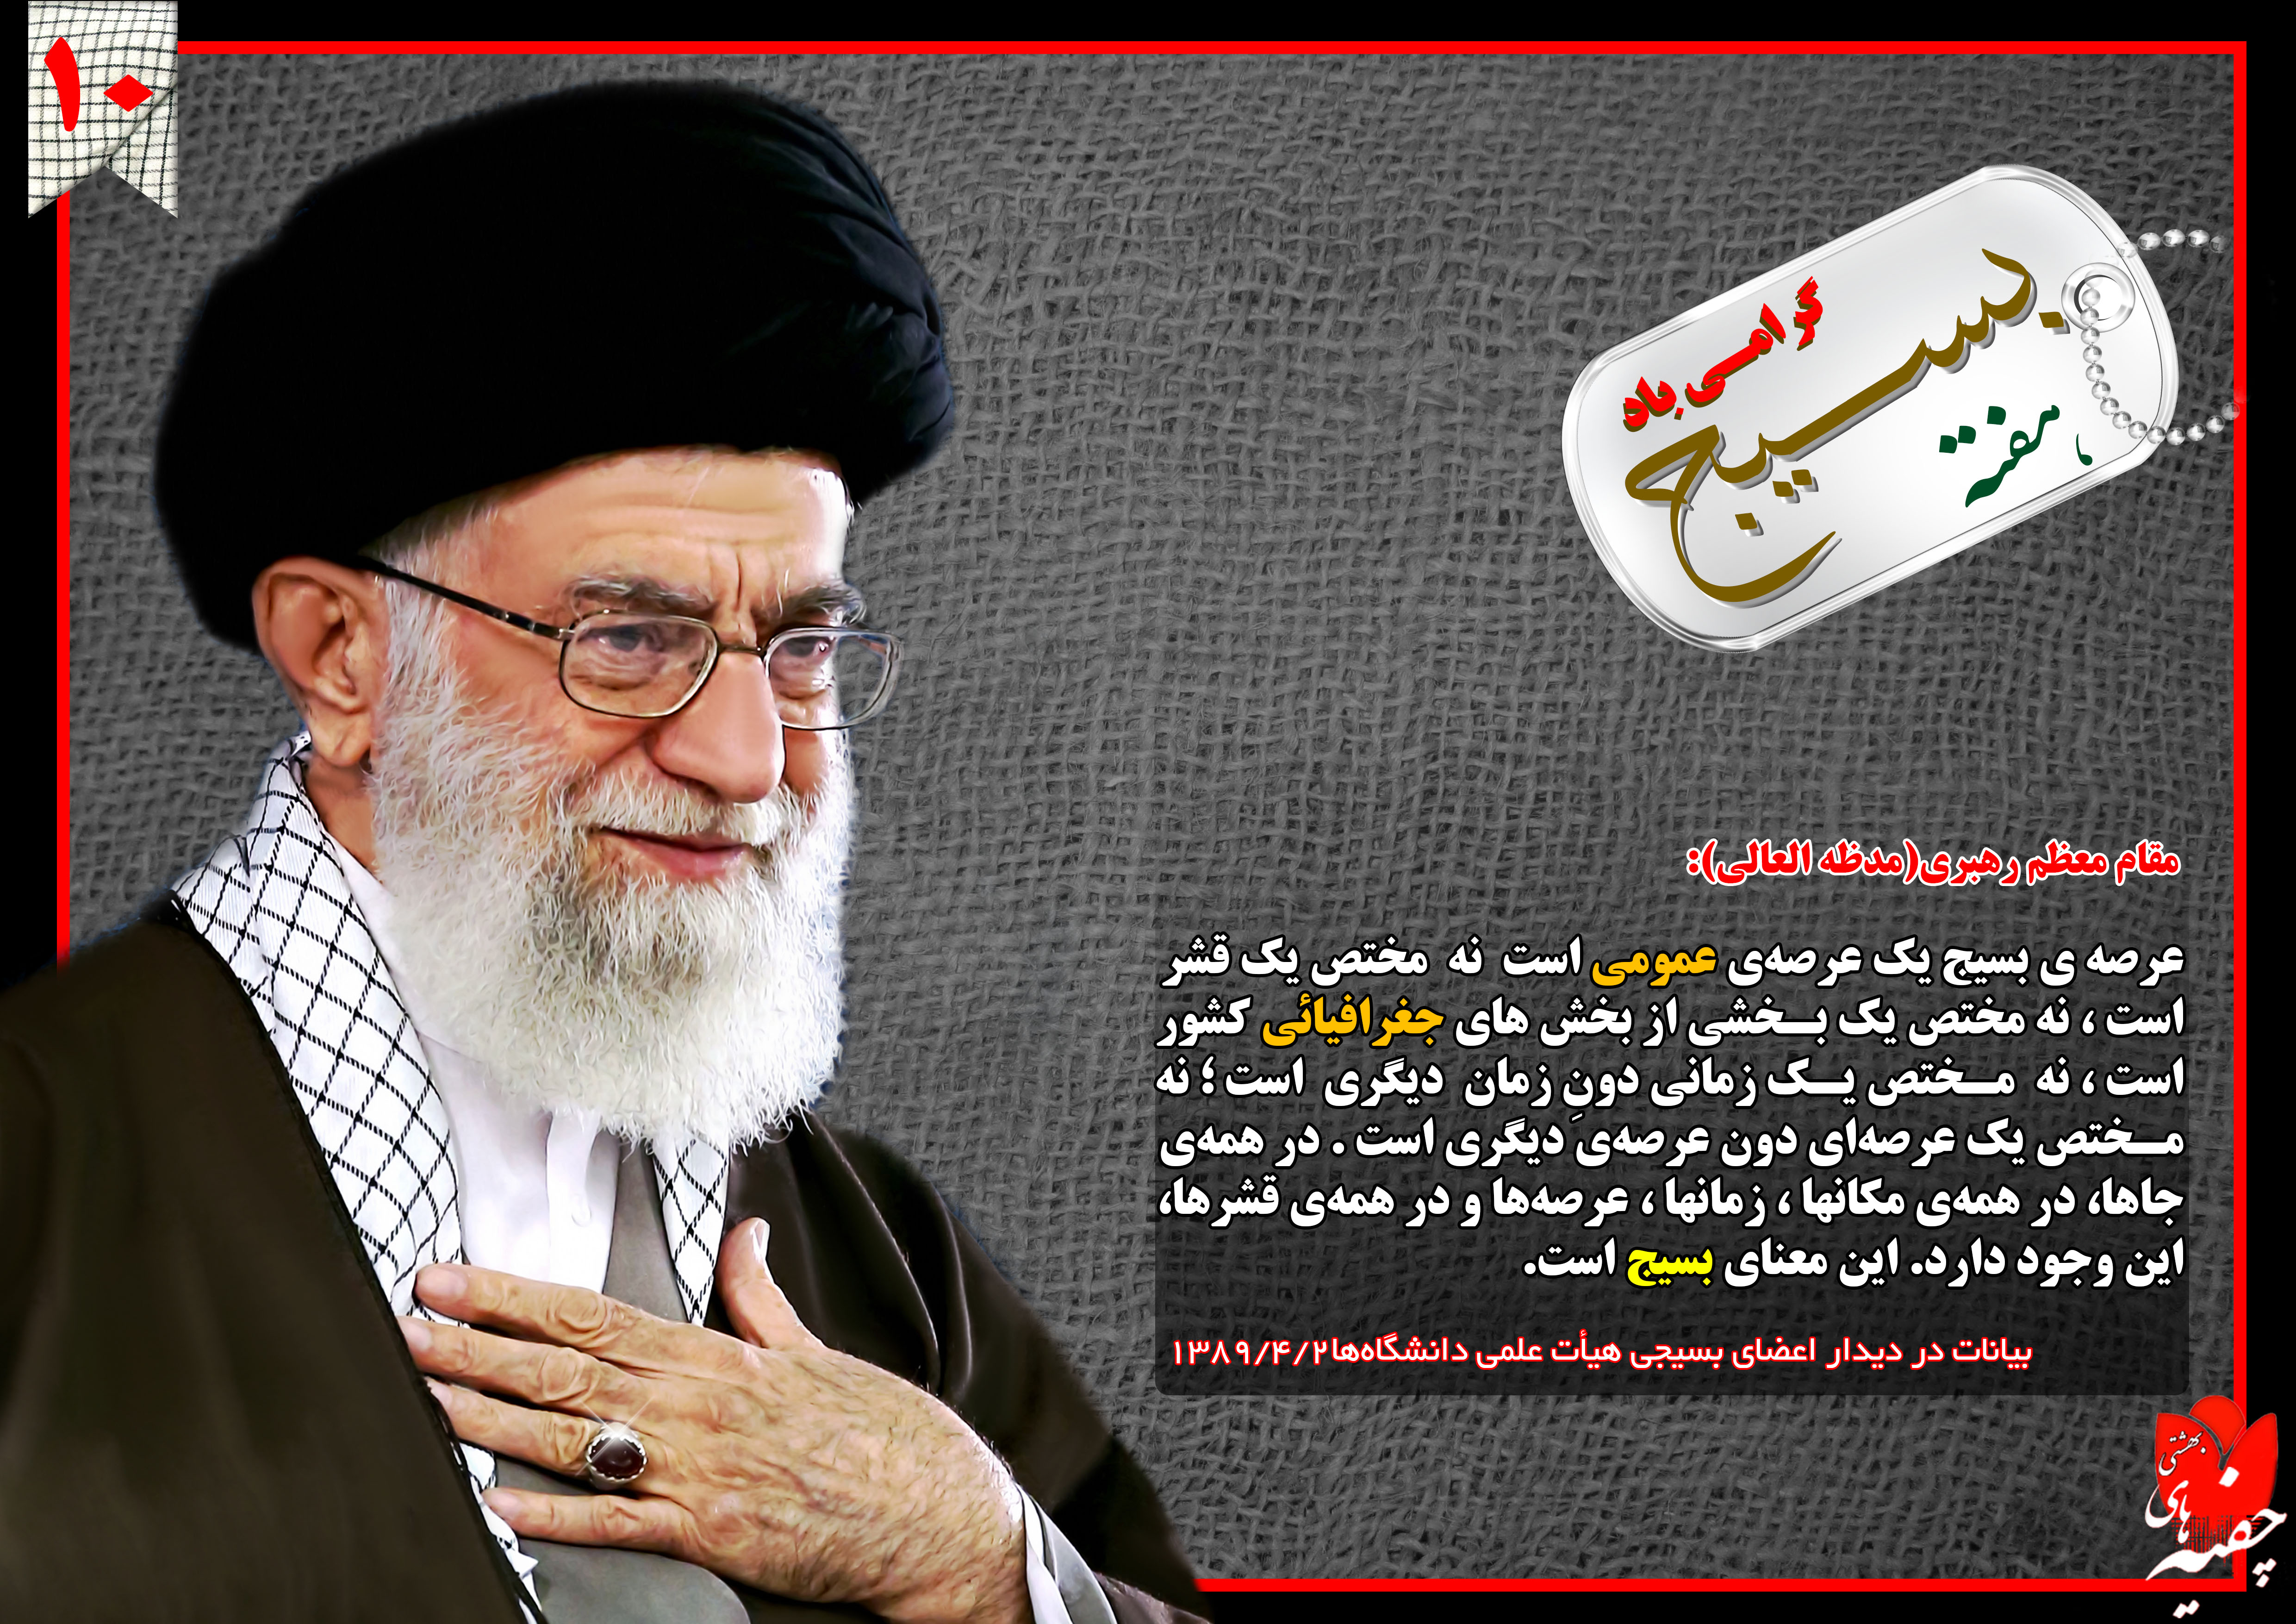 http://bayanbox.ir/view/5107311402592057740/Imam-Khamenei-basij10.jpg